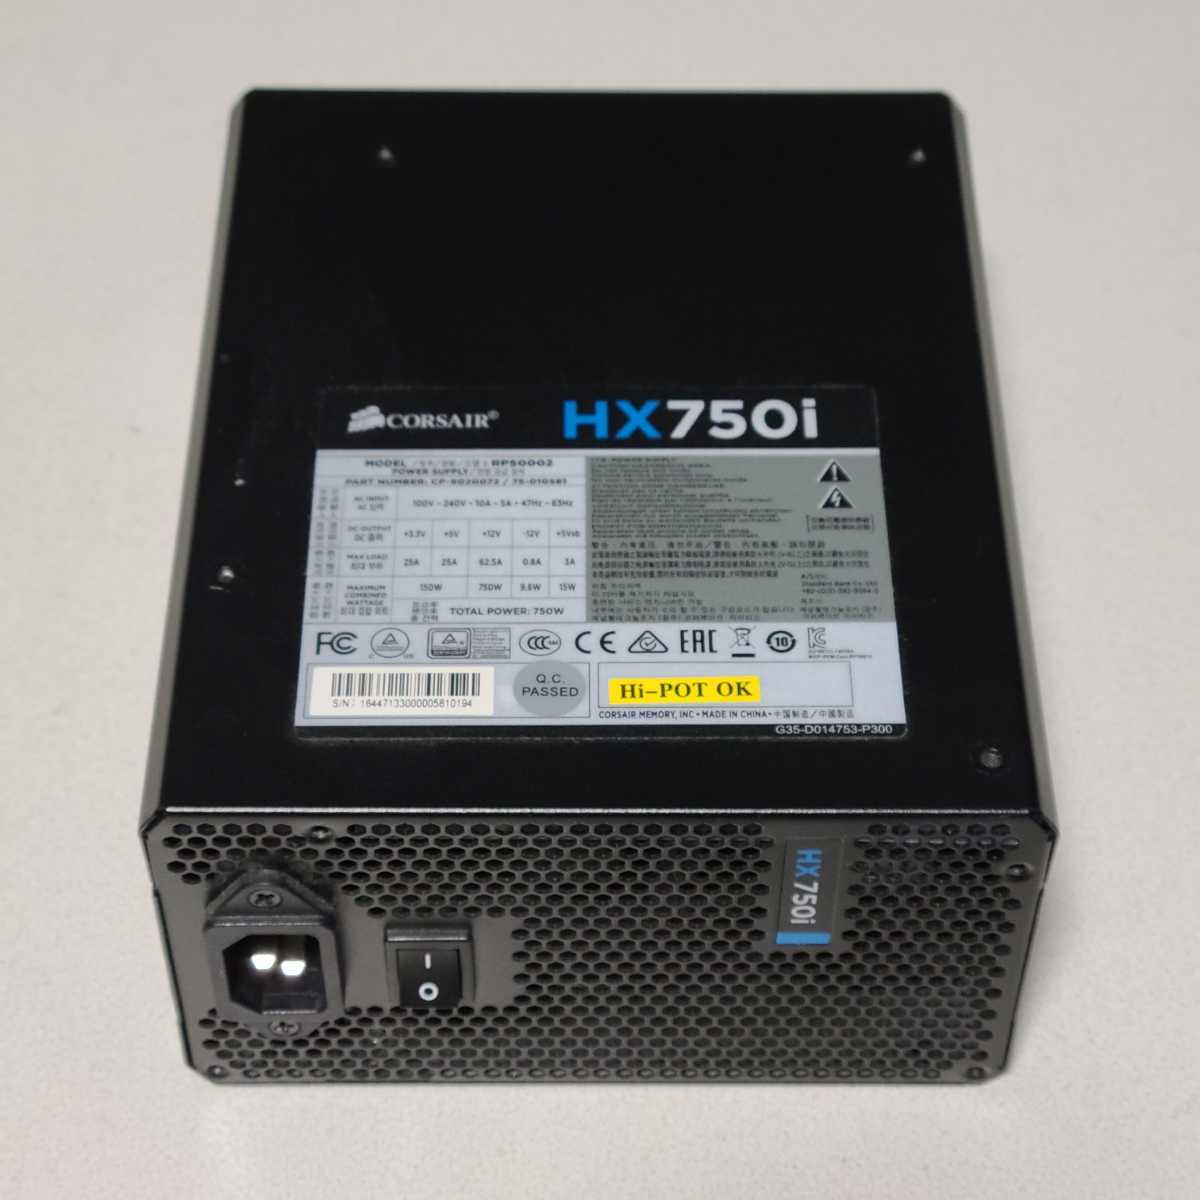 CORSAIR HX750i RPS0002 750W 80PLUS PLATINUM認証 ATX電源ユニット 動作確認済み フルプラグイン PCパーツ